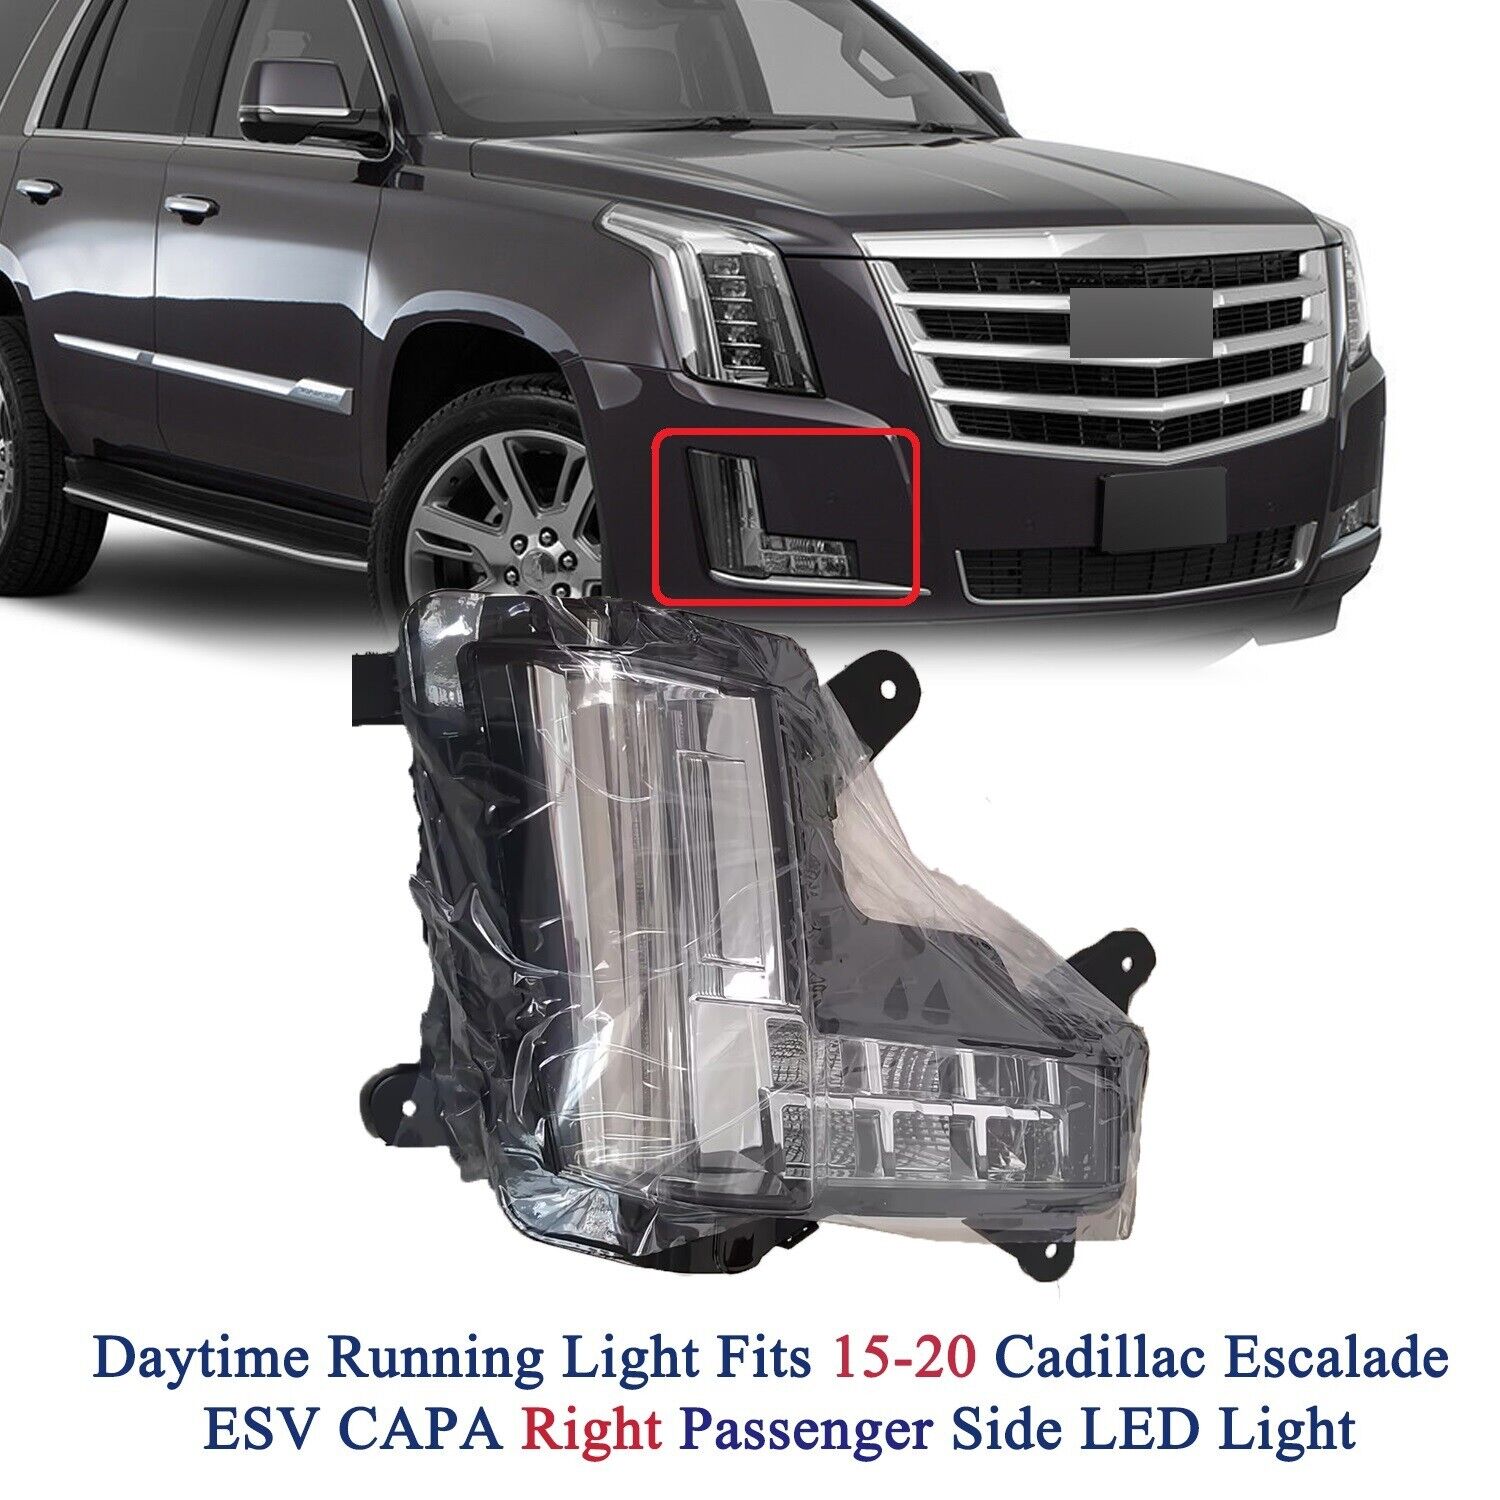 Daytime Running Light For 15-20 Cadillac Escalade ESV CAPA Right Passenger LED